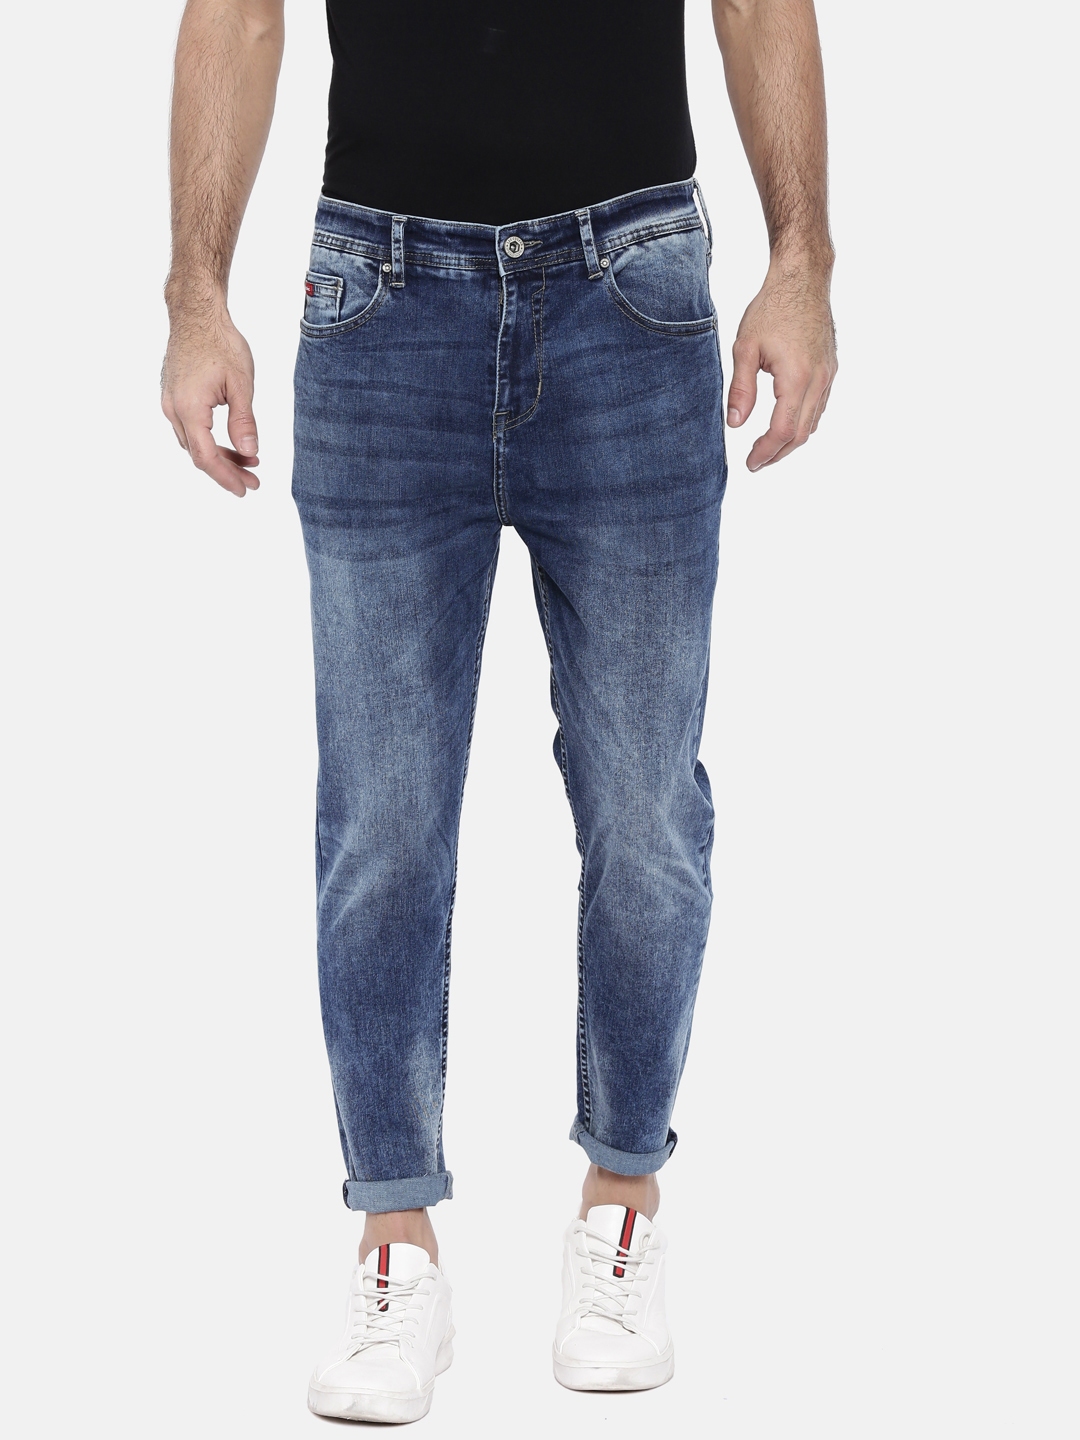 lee cooper stretch jeans mens